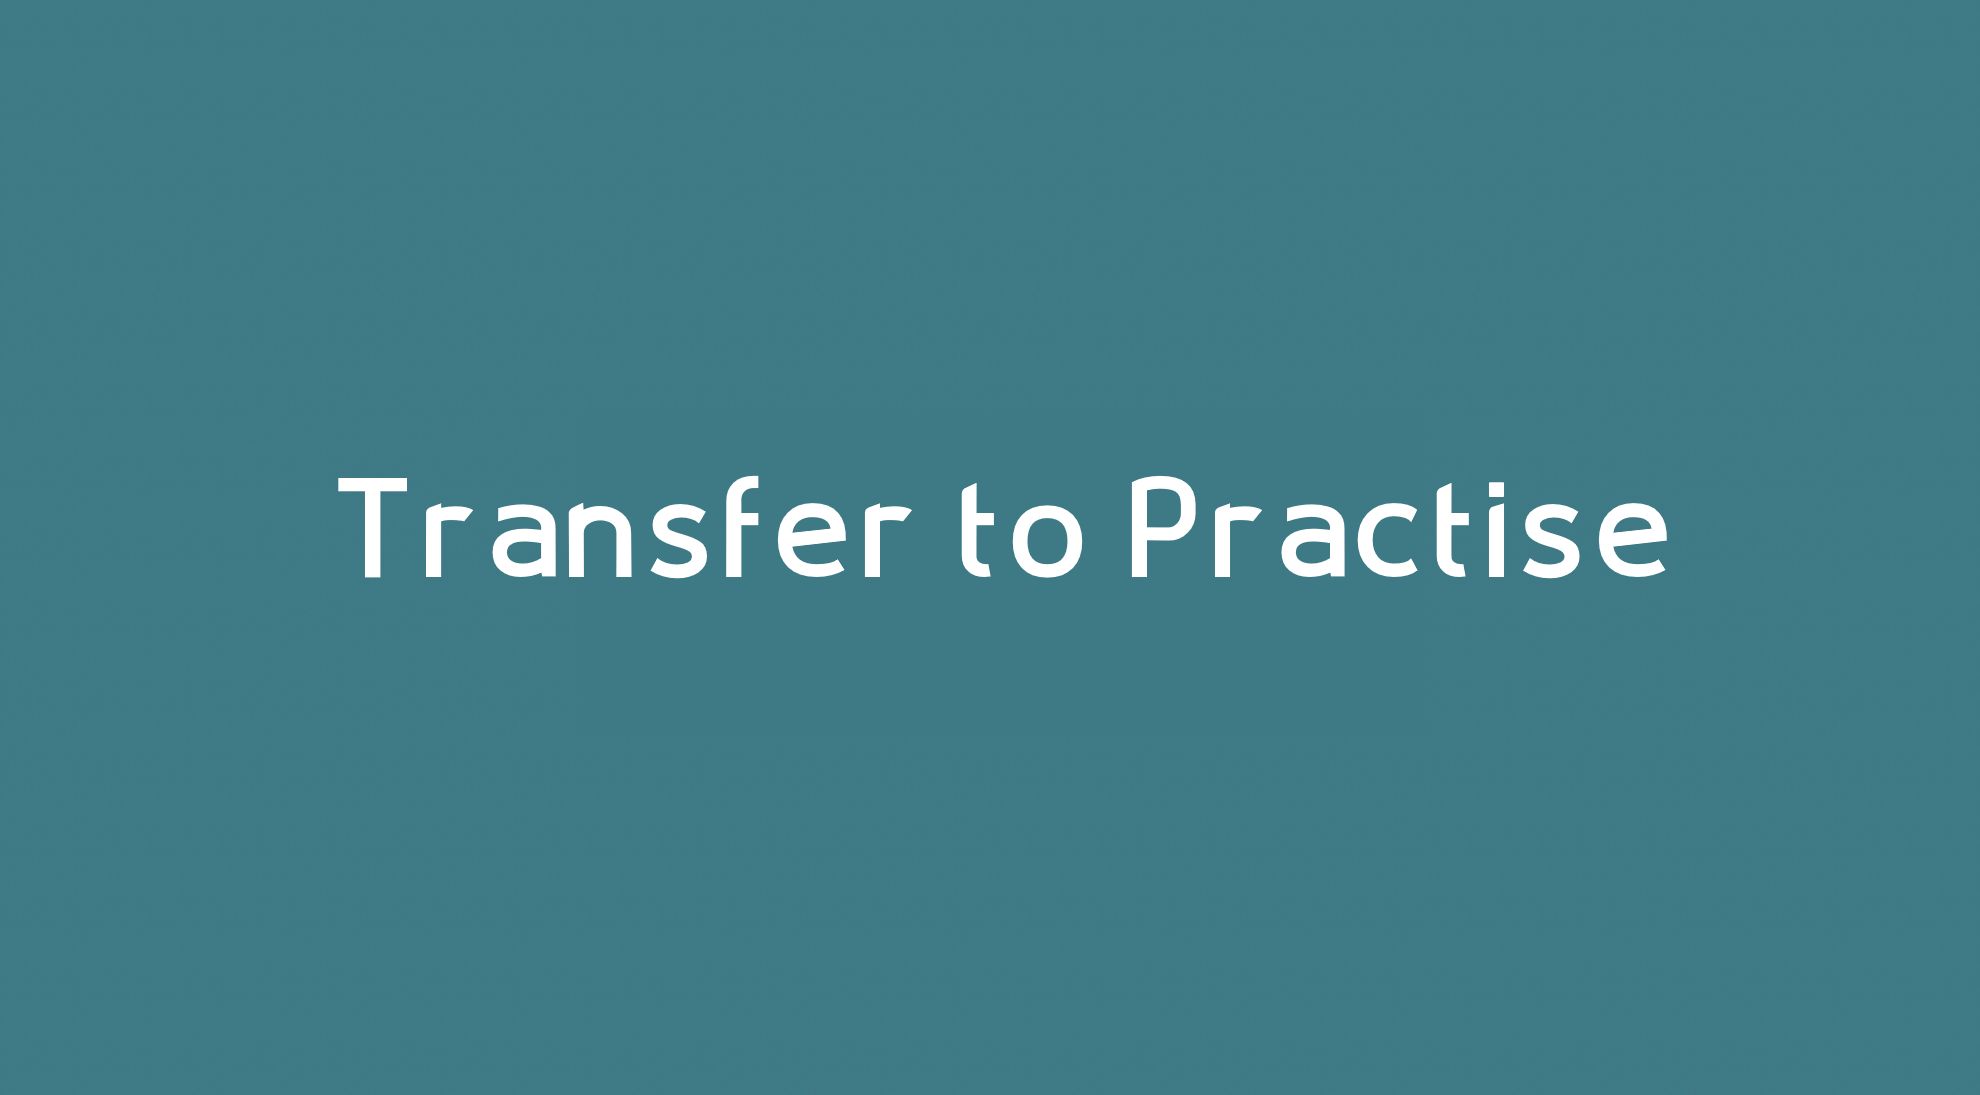 Transfer to Practise